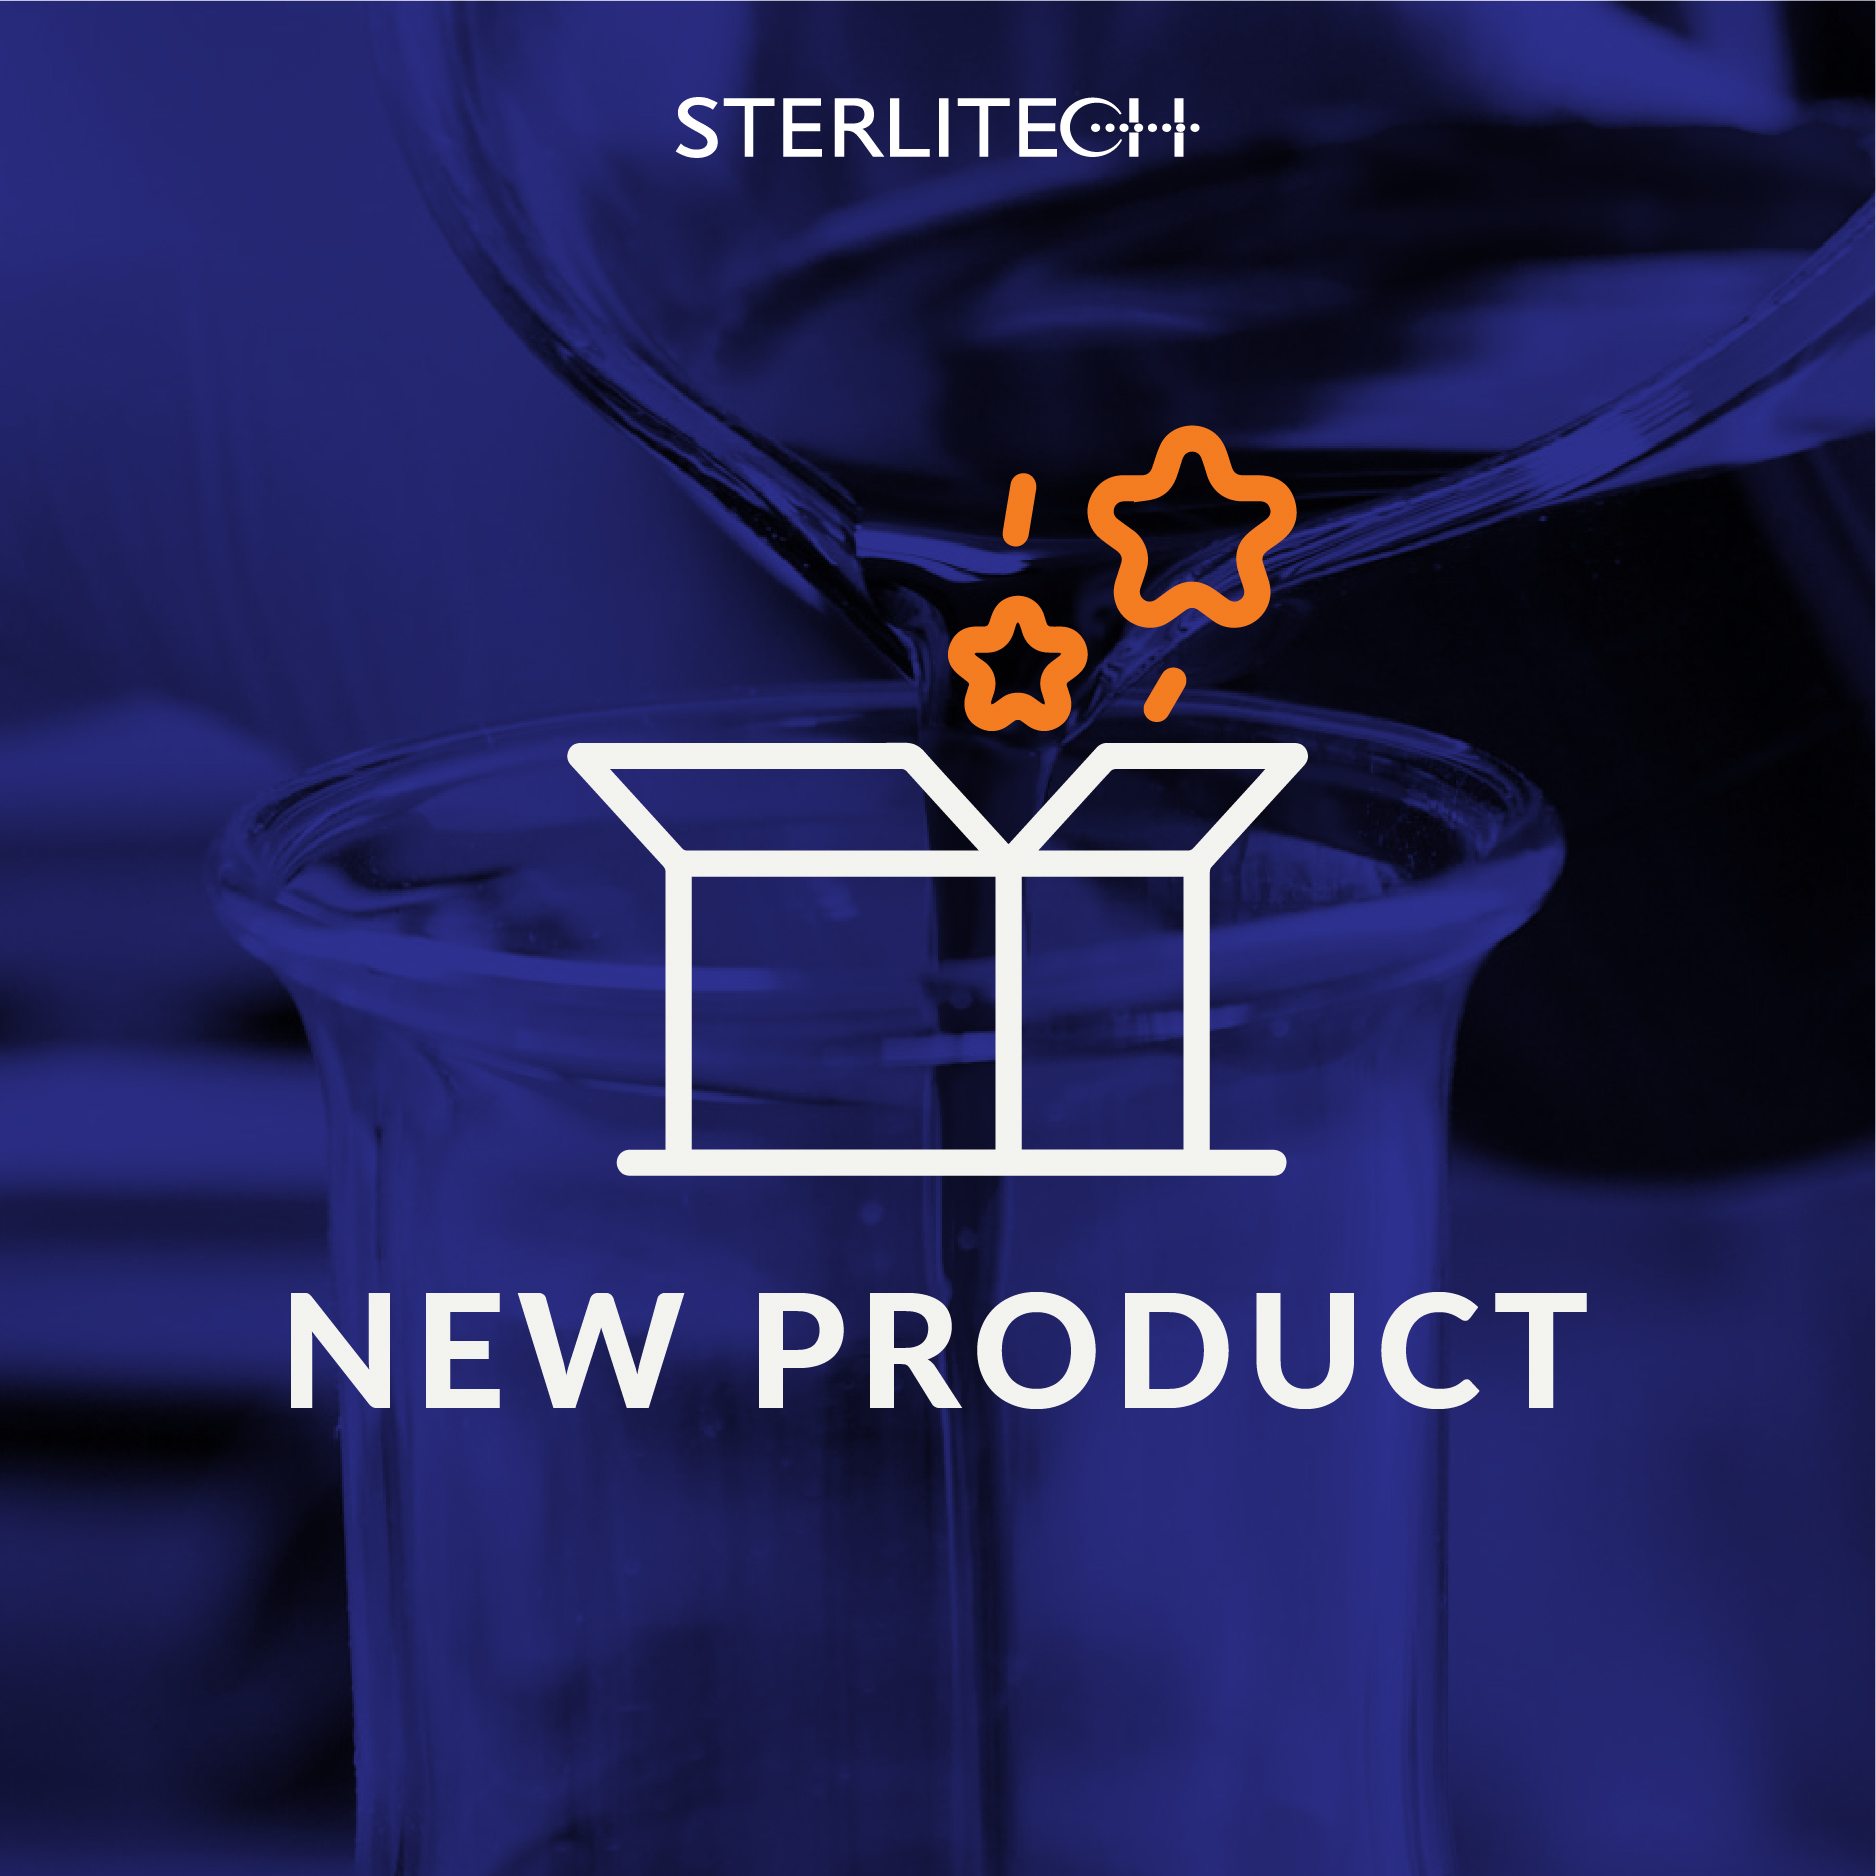 Sterlitech's New Ultrafiltration Membranes Arrive